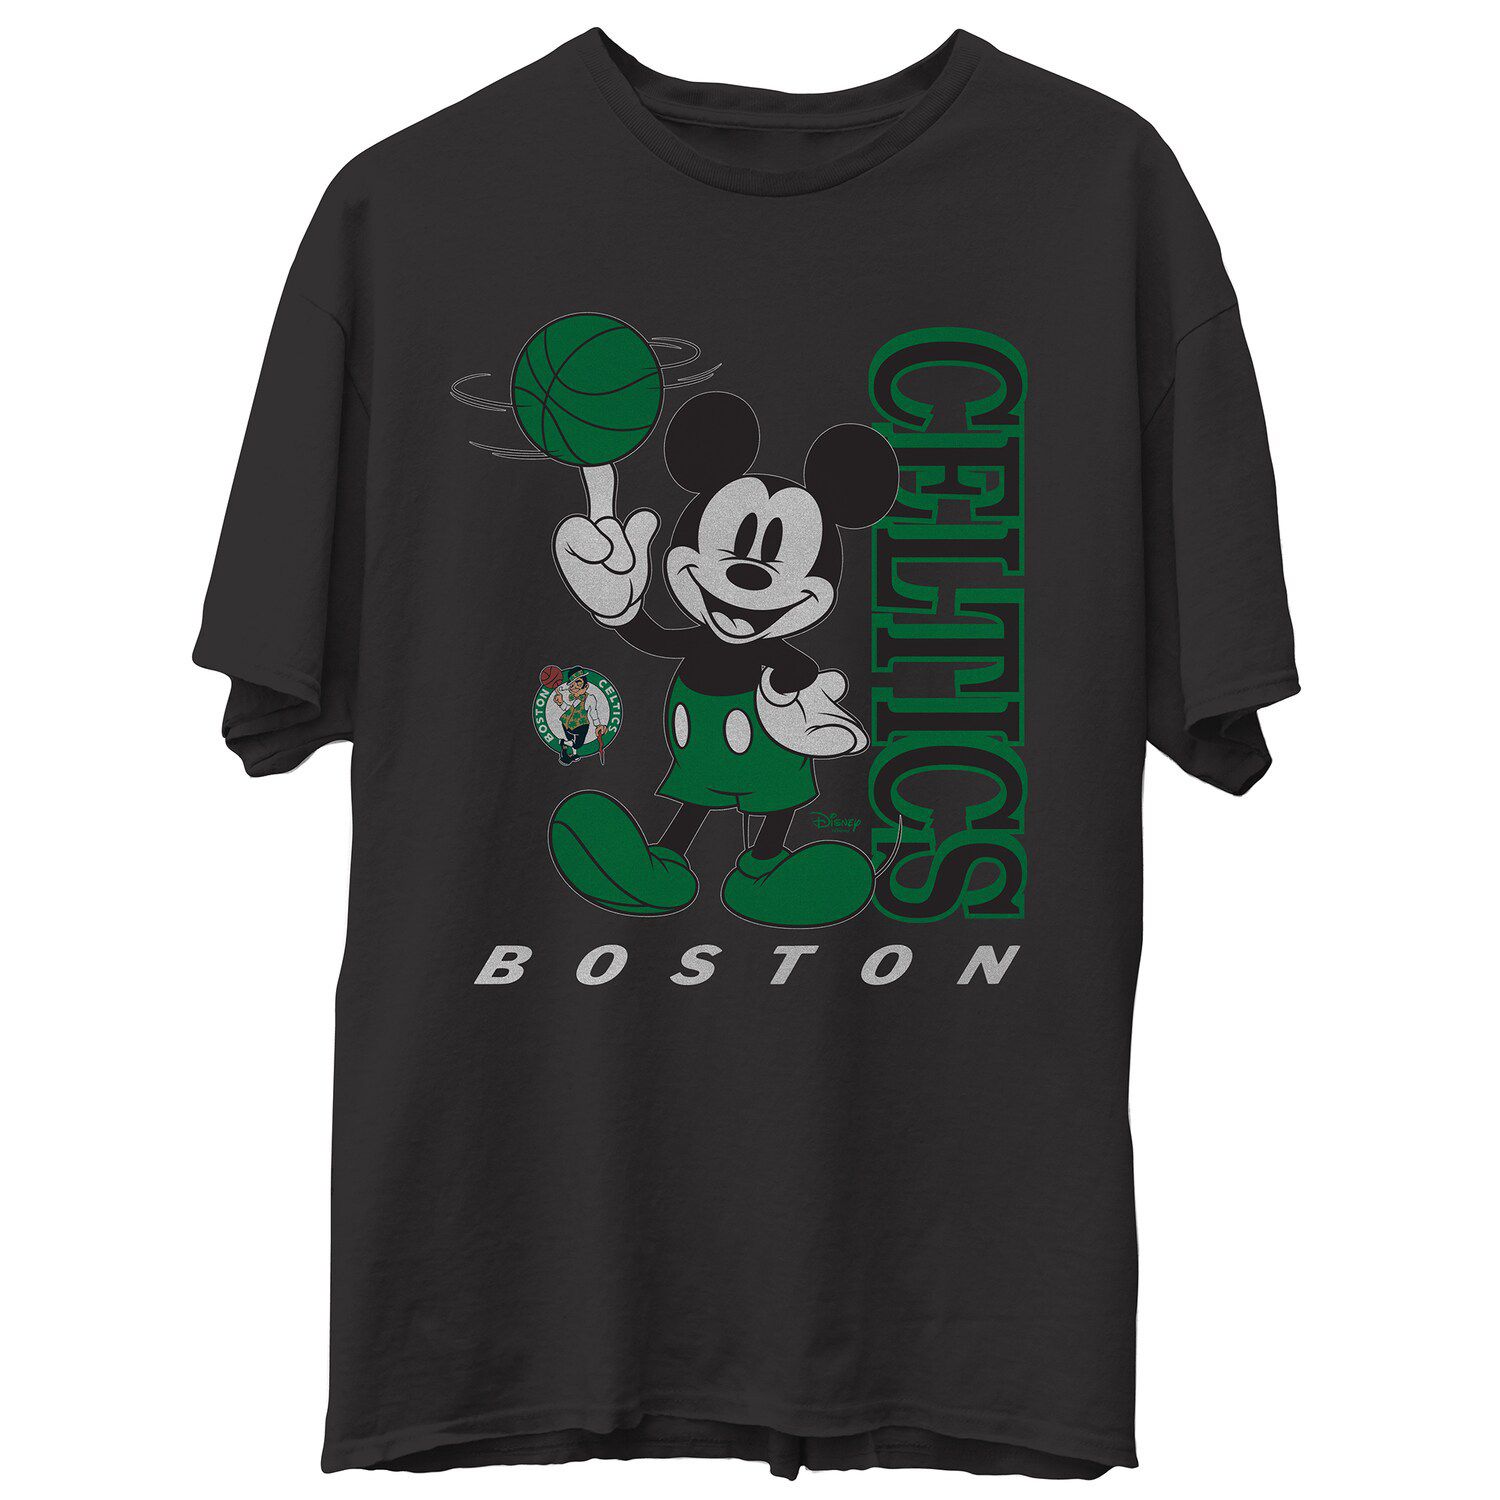 boston celtic merchandise